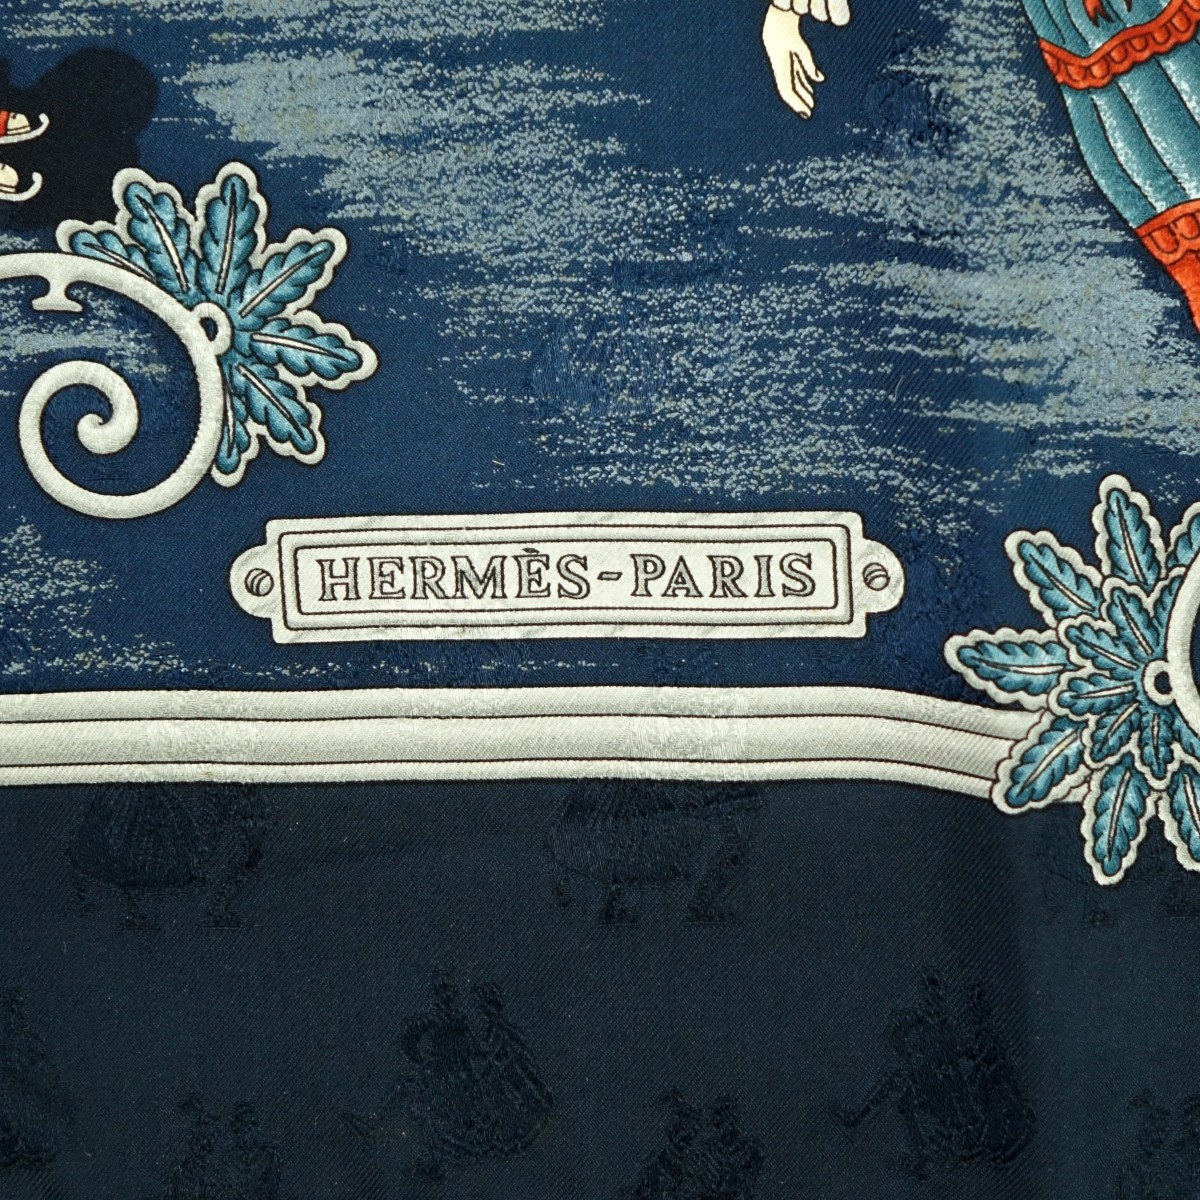 Hermes Joies d'Hiver Jacquard Silk Scarf